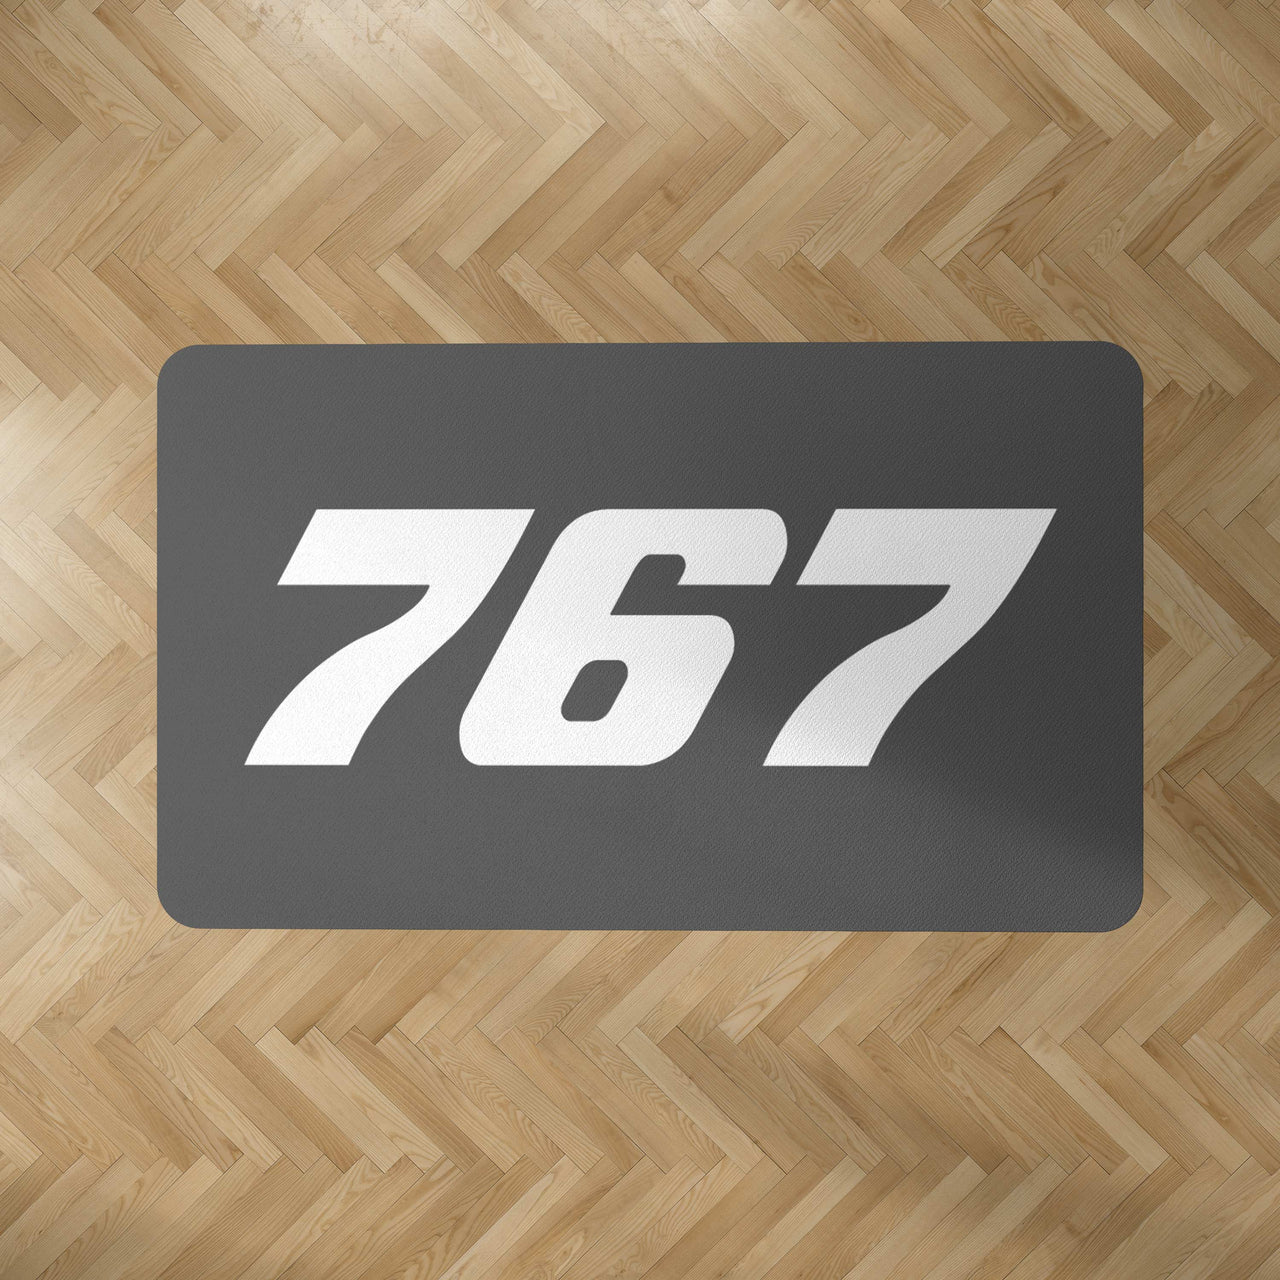 767 Flat Text Designed Carpet & Floor Mats